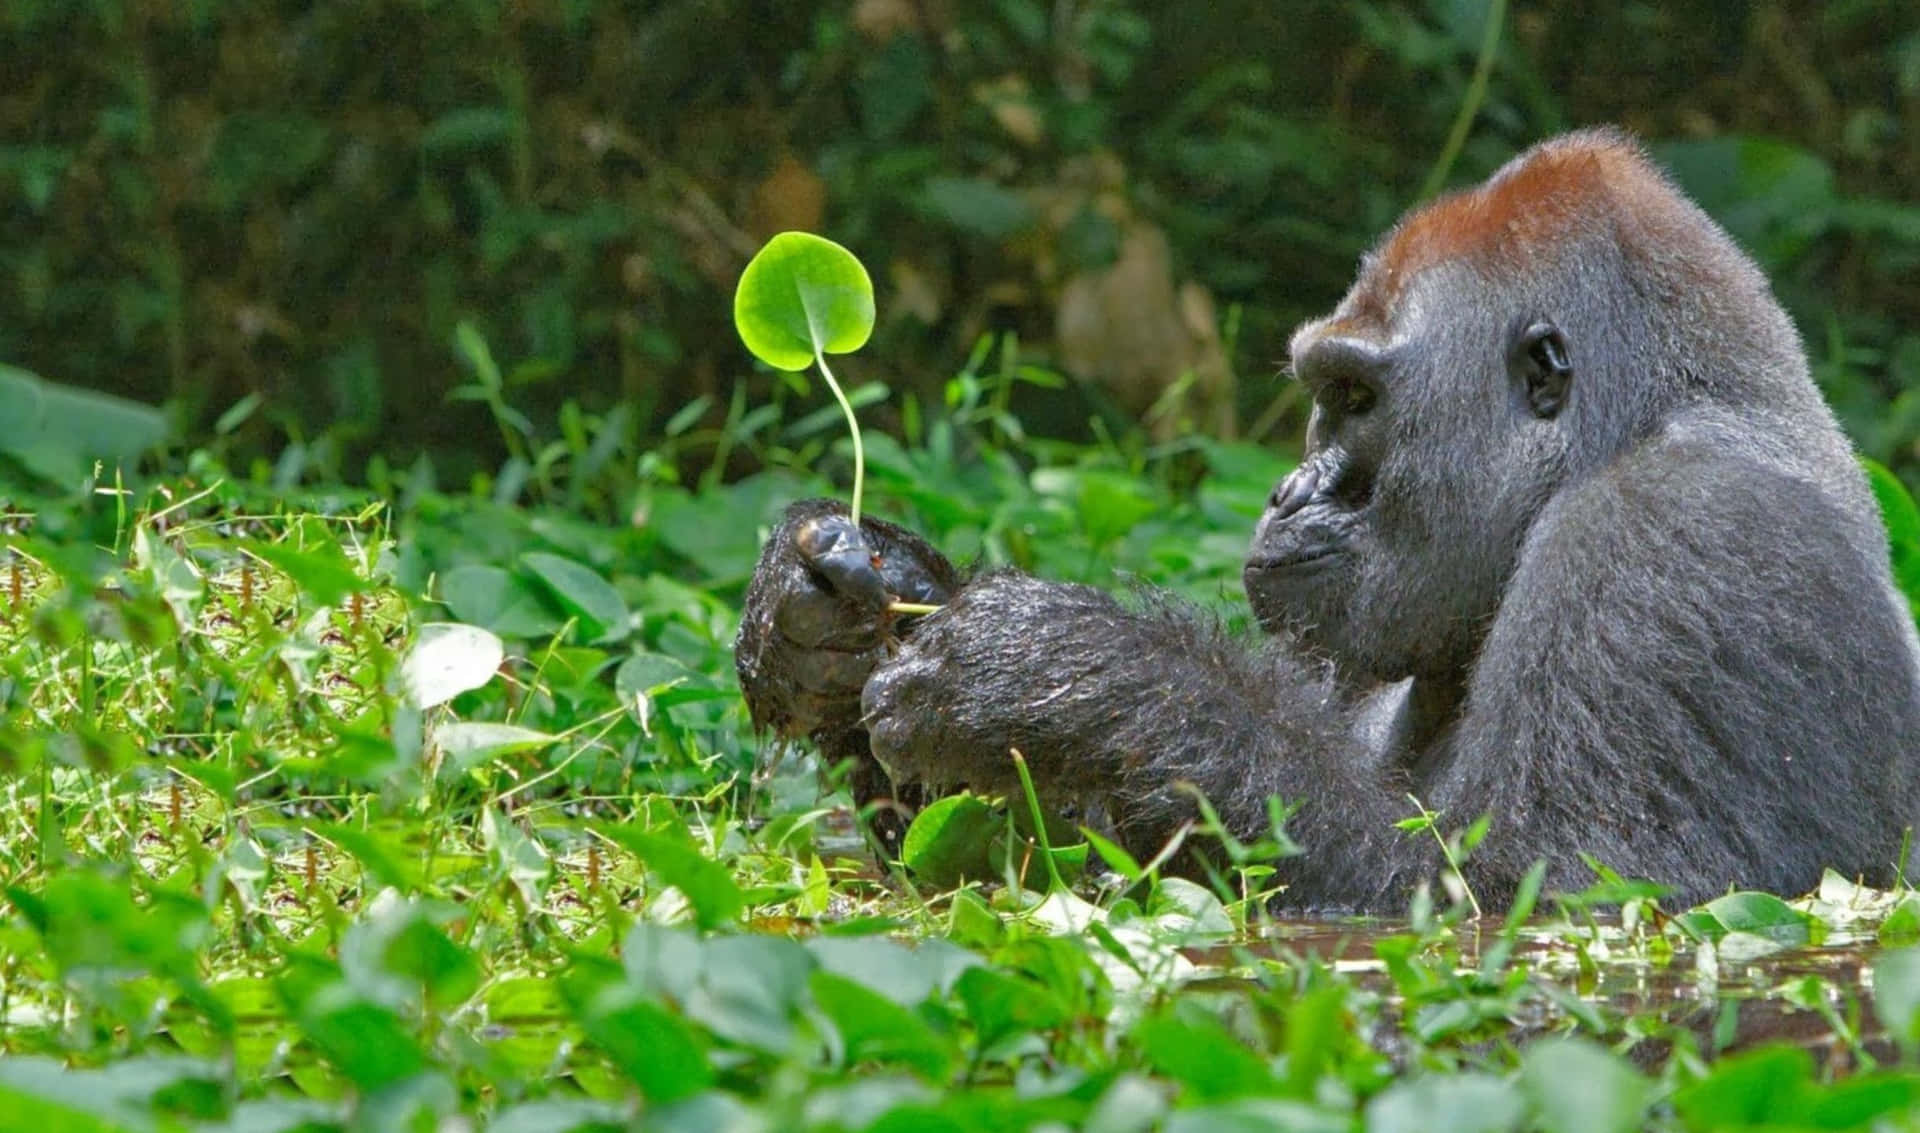 Unosguardo Ravvicinato A Un Gorilla.